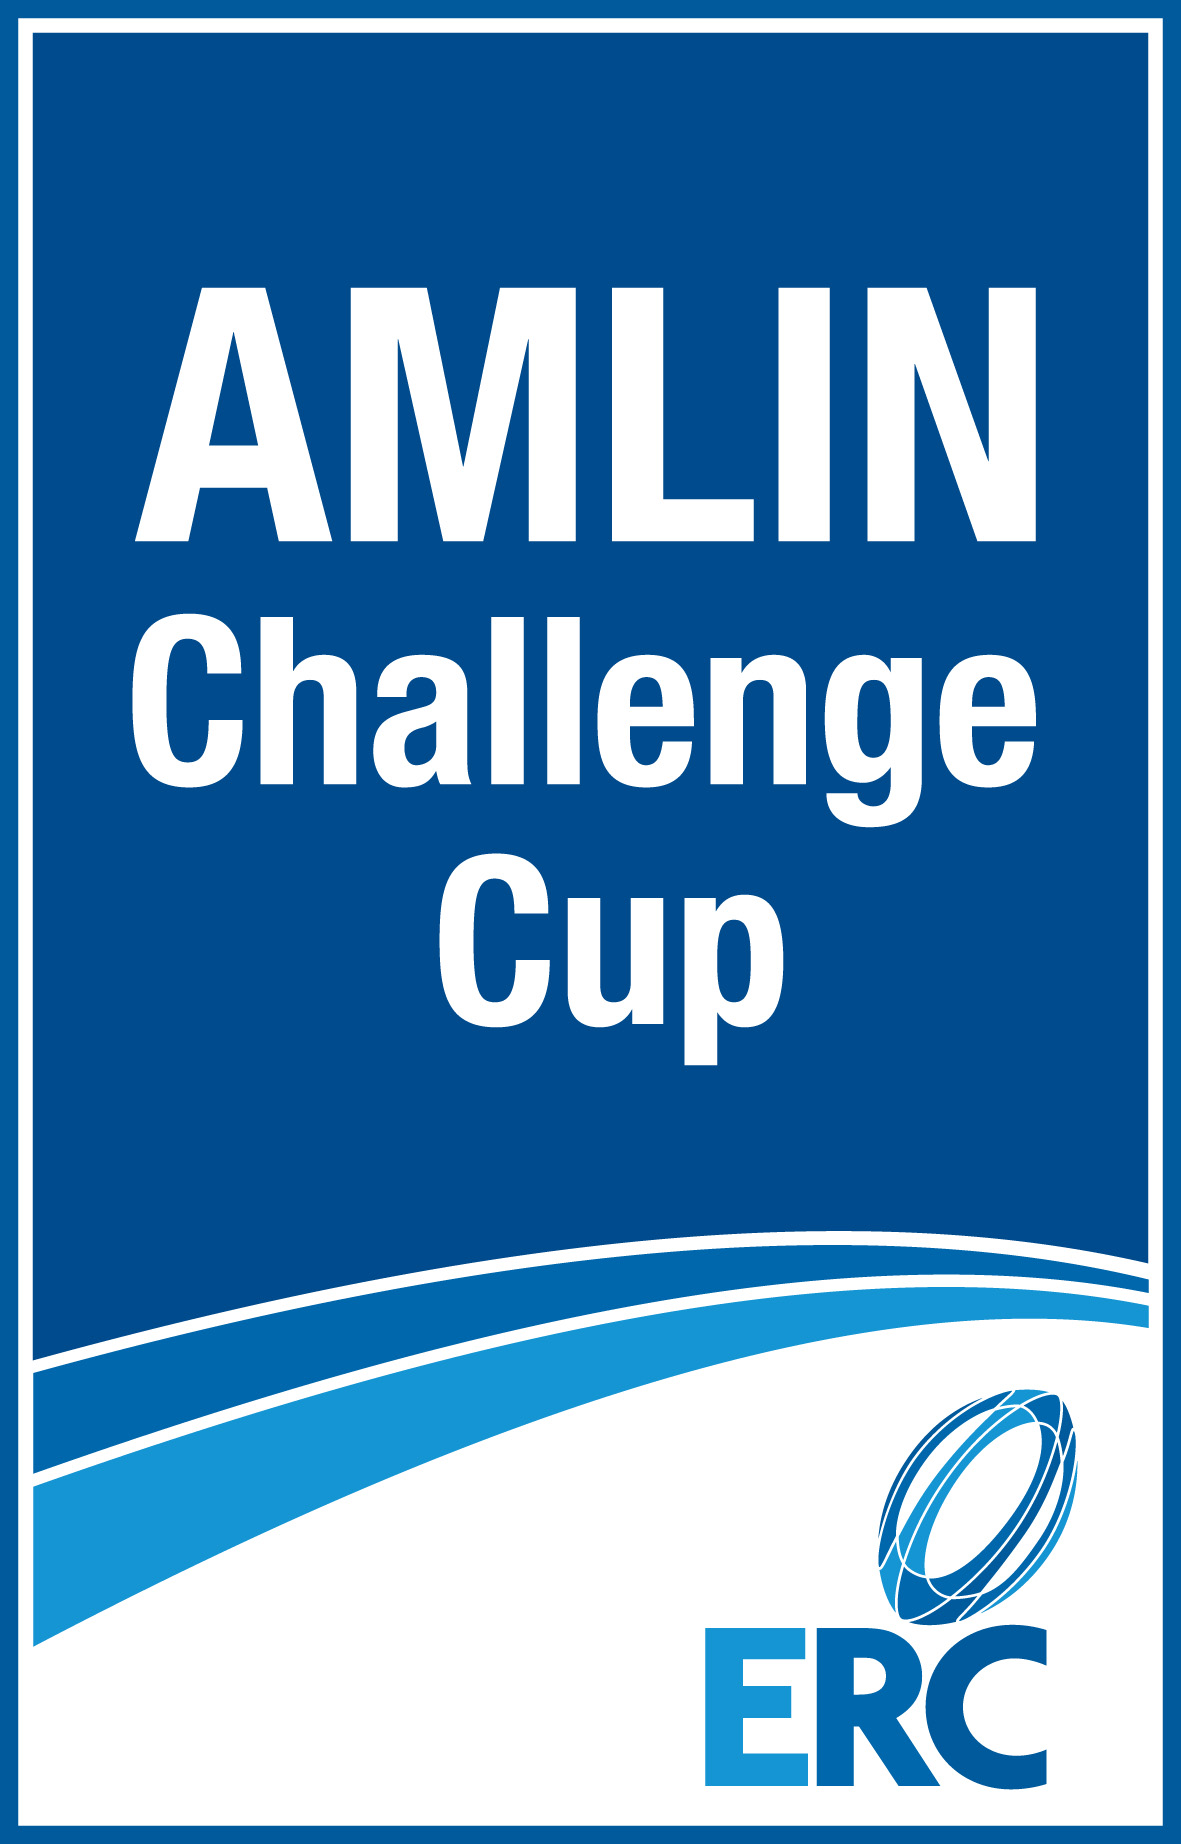 http://blogdorugby.files.wordpress.com/2009/10/portrait_amlin_challenge_cup_logo_cmyk.jpg